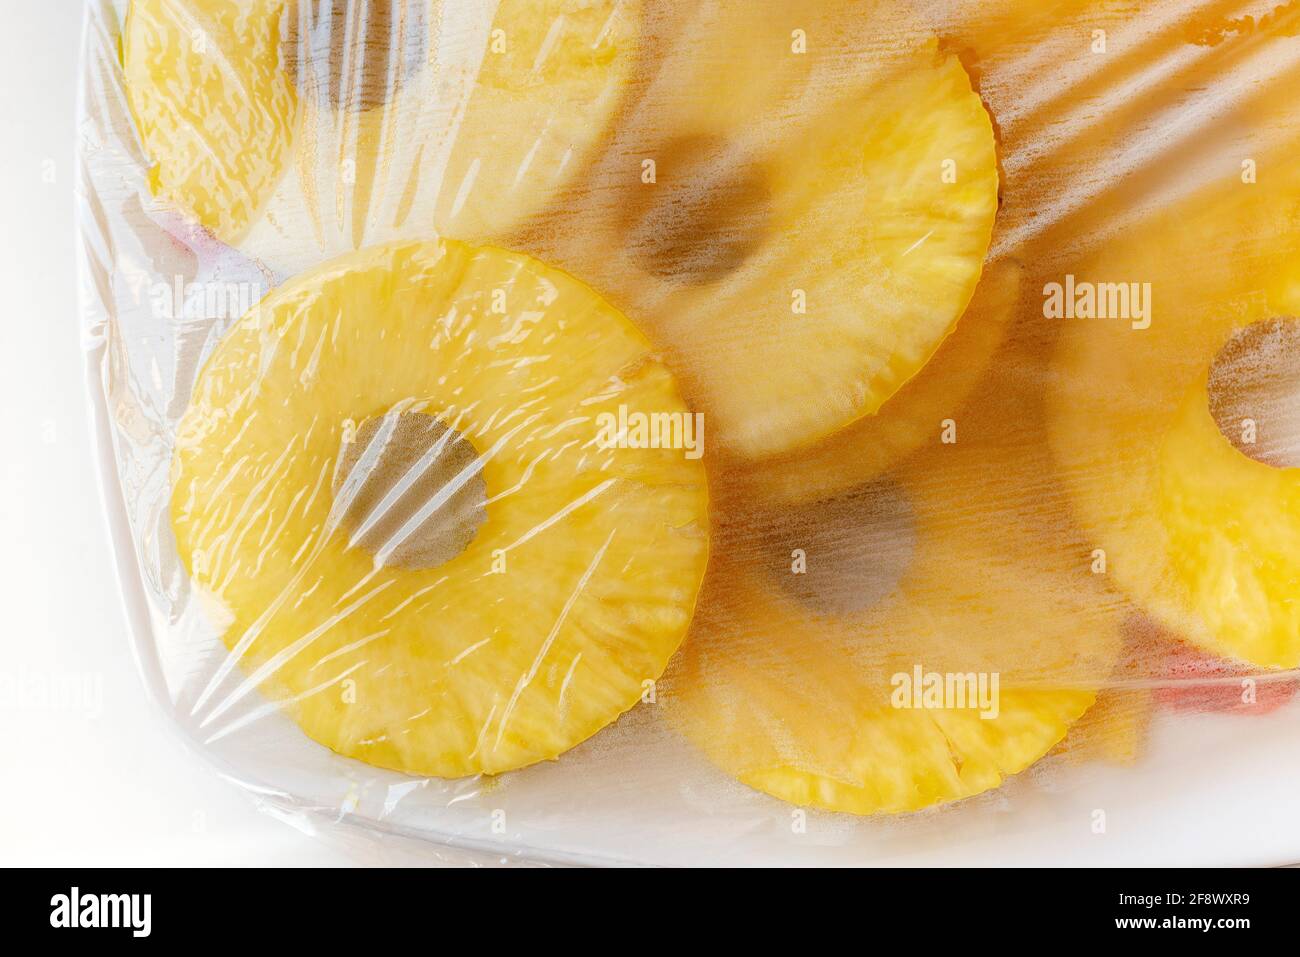 https://c8.alamy.com/comp/2F8WXR9/slices-of-fresh-pineapple-ananas-covered-with-plastic-wrap-2F8WXR9.jpg